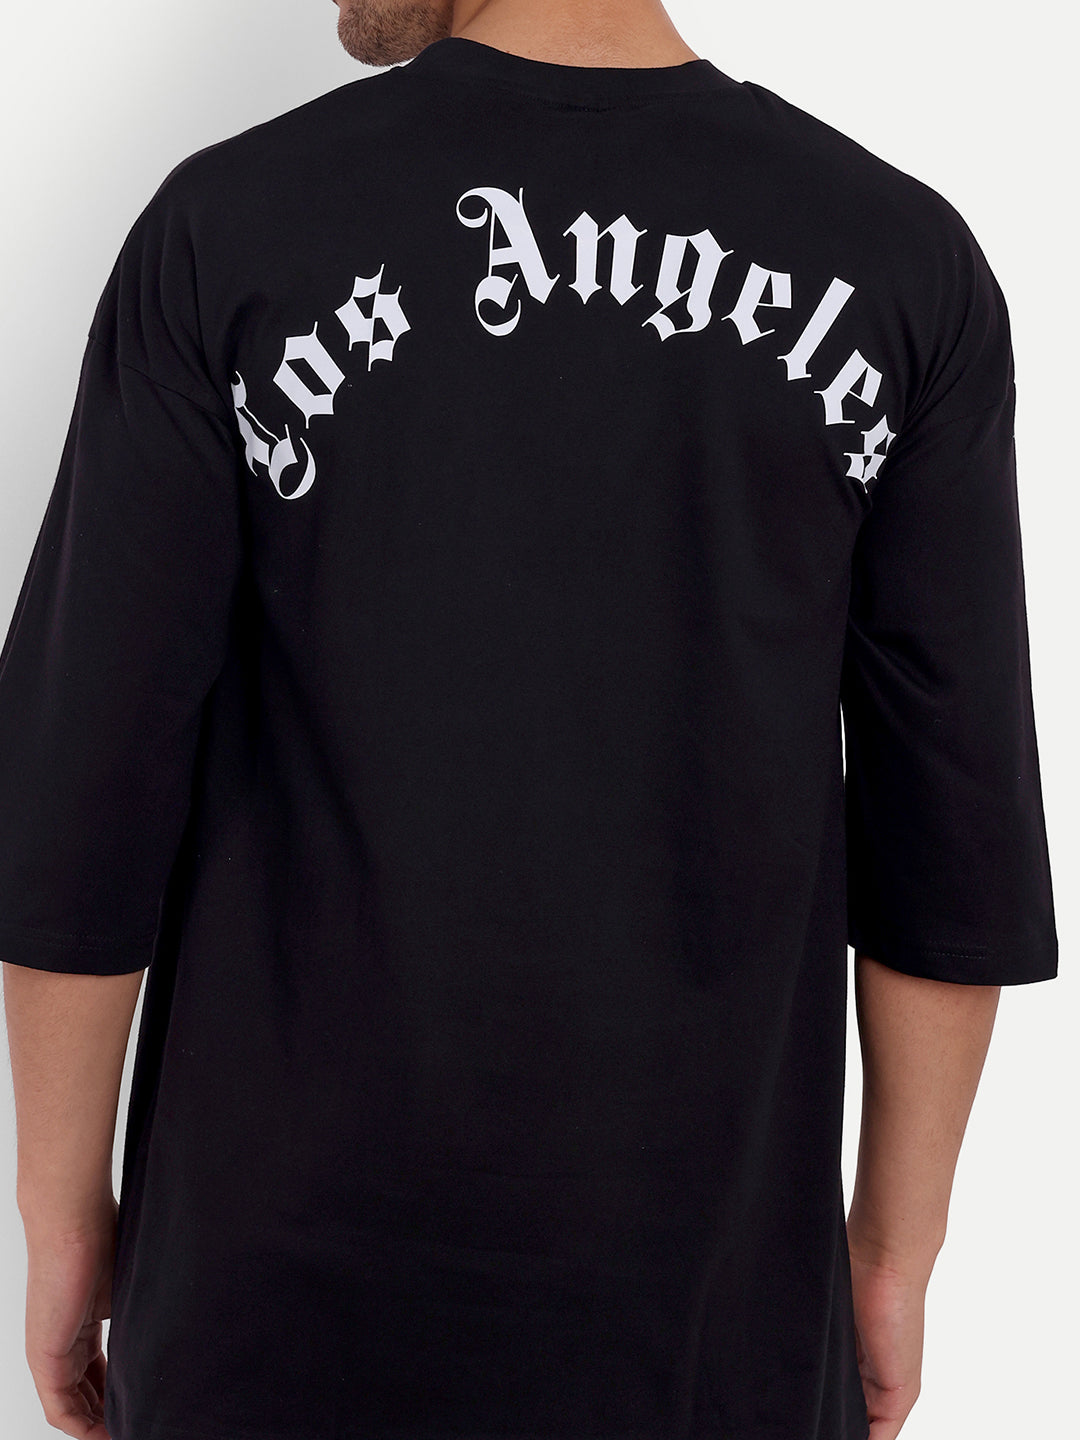 Los Angeles Black Drop-shoulder Oversized Tee by Gavin Paris XXL / Black